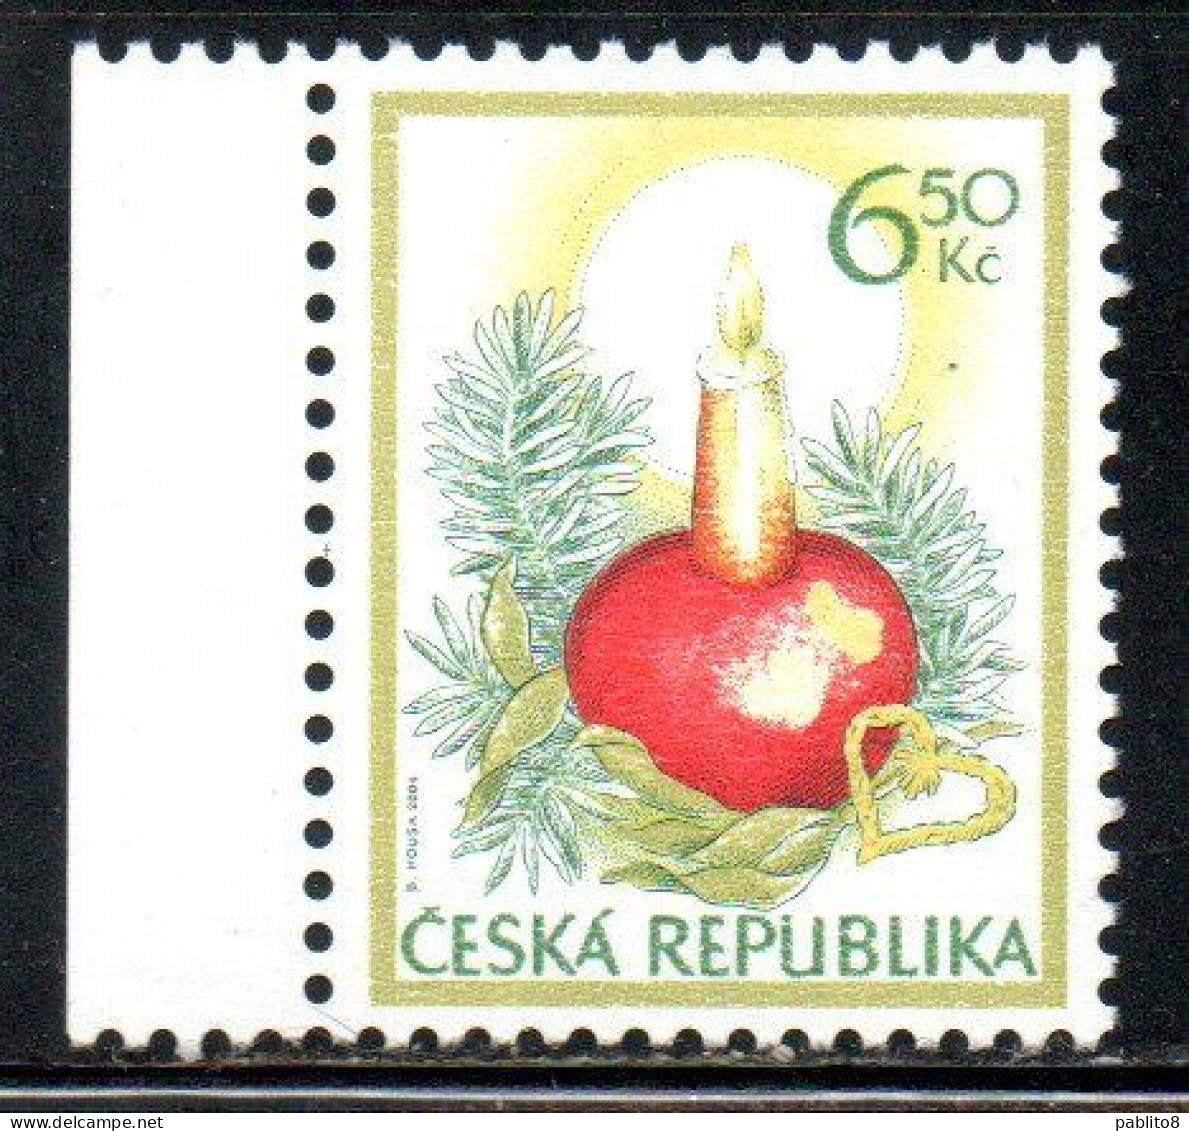 CZECH REPUBLIC CECA REPUBBLICA CZECHOSLOVAKIA 2004 CHRISTMAS NATALE NOEL WEIHNACHTEN NAVIDAD 6.50k MNH - Neufs